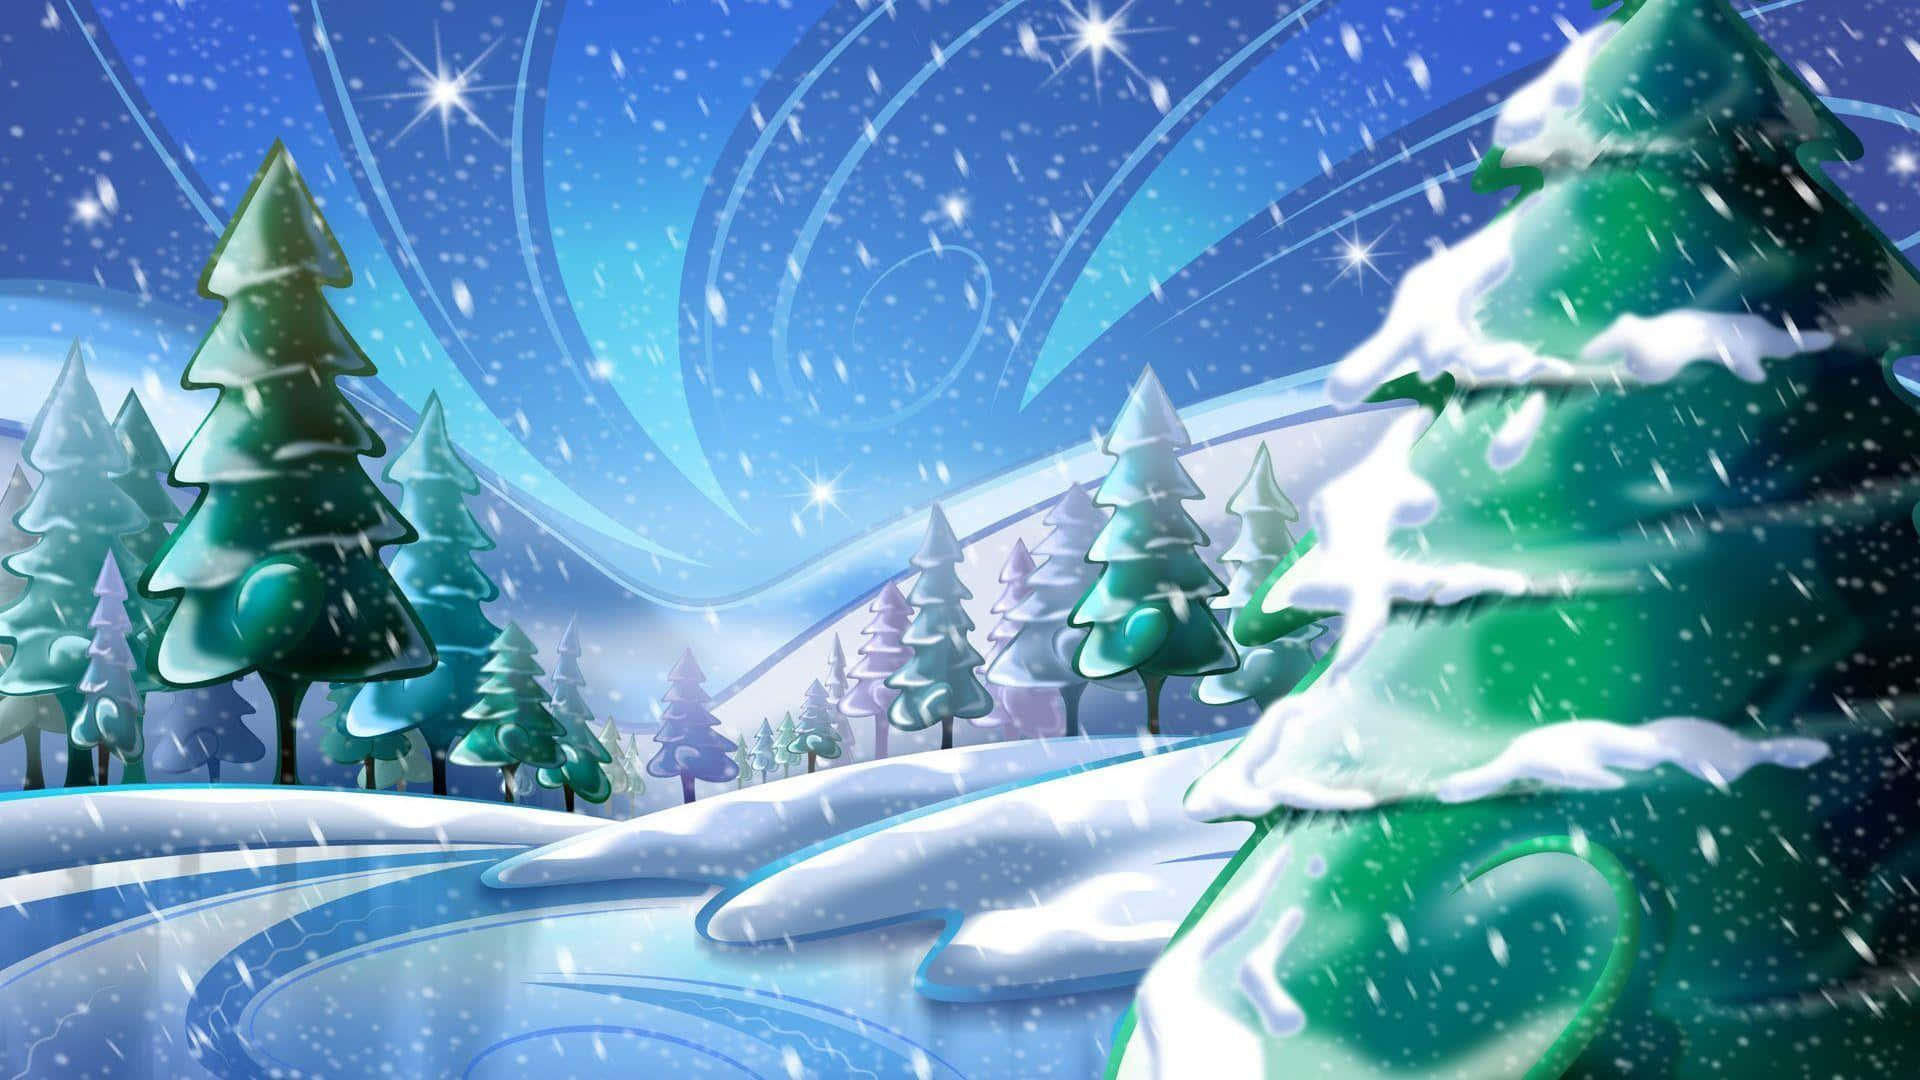 Pokemon Christmas wallpaper by mystiquejones6  Download on ZEDGE  650c